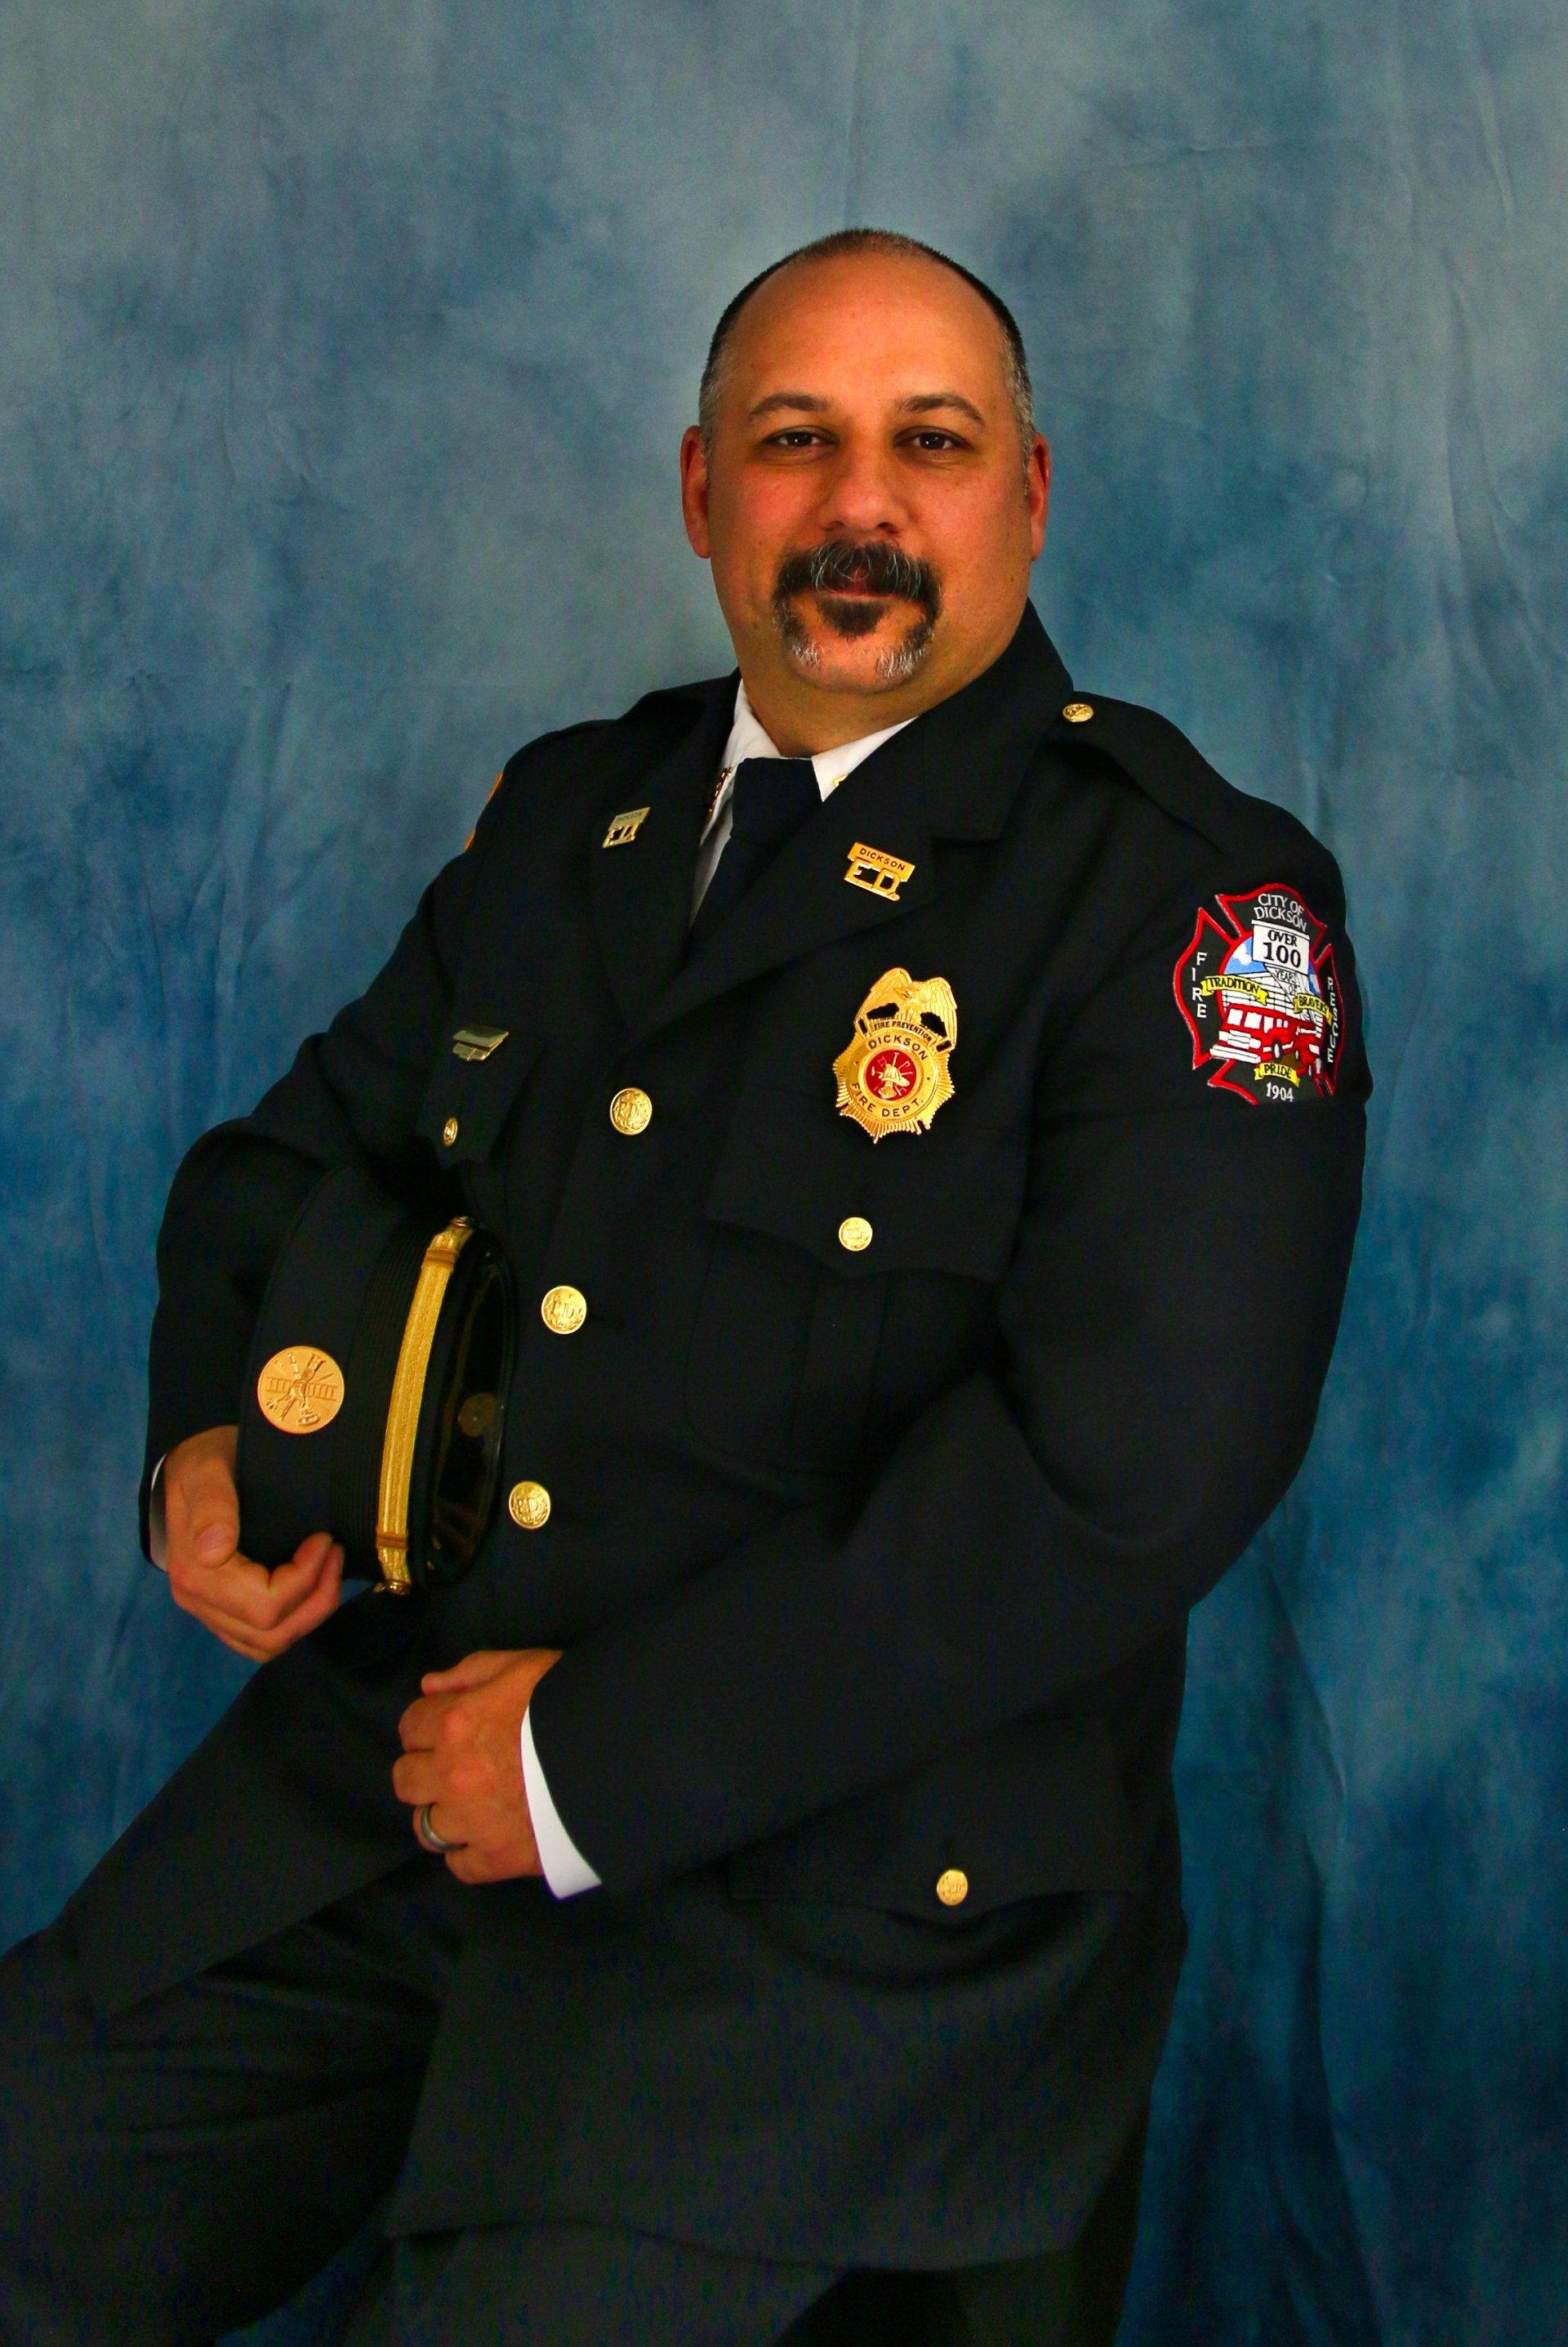 Fire Prevention Officer Michael Osman